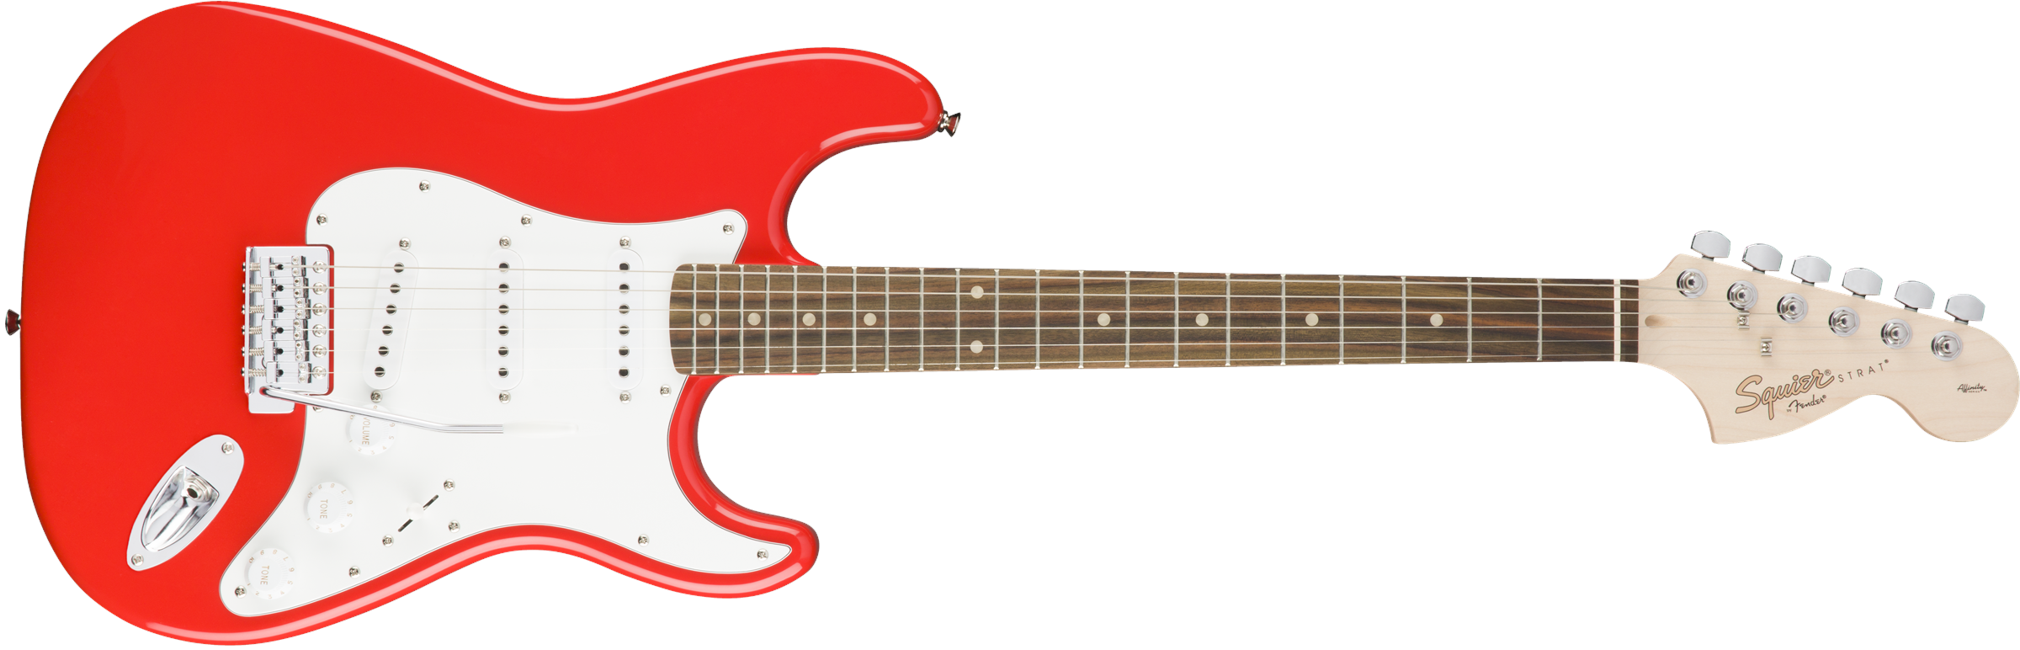 Squier By Fender - Affinity Stratocaster - Elektrisk Guitar (Race Red)